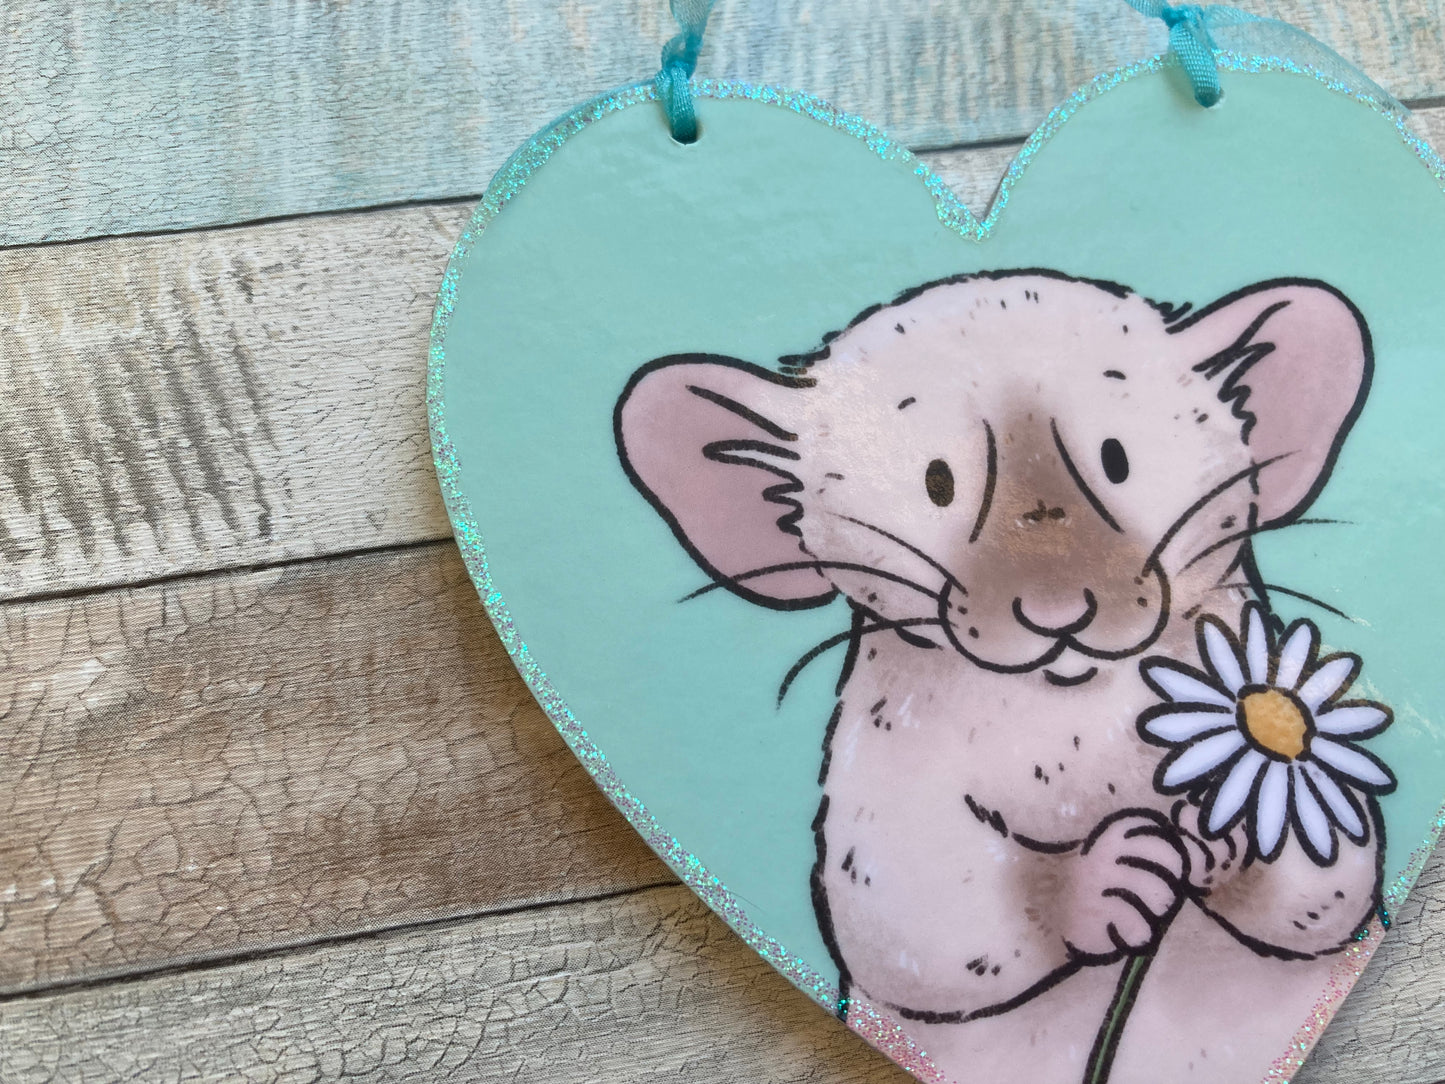 Daisy Rat | Cute Rat Hanging Heart Decoration | Fun Rat Valentines Day Gift